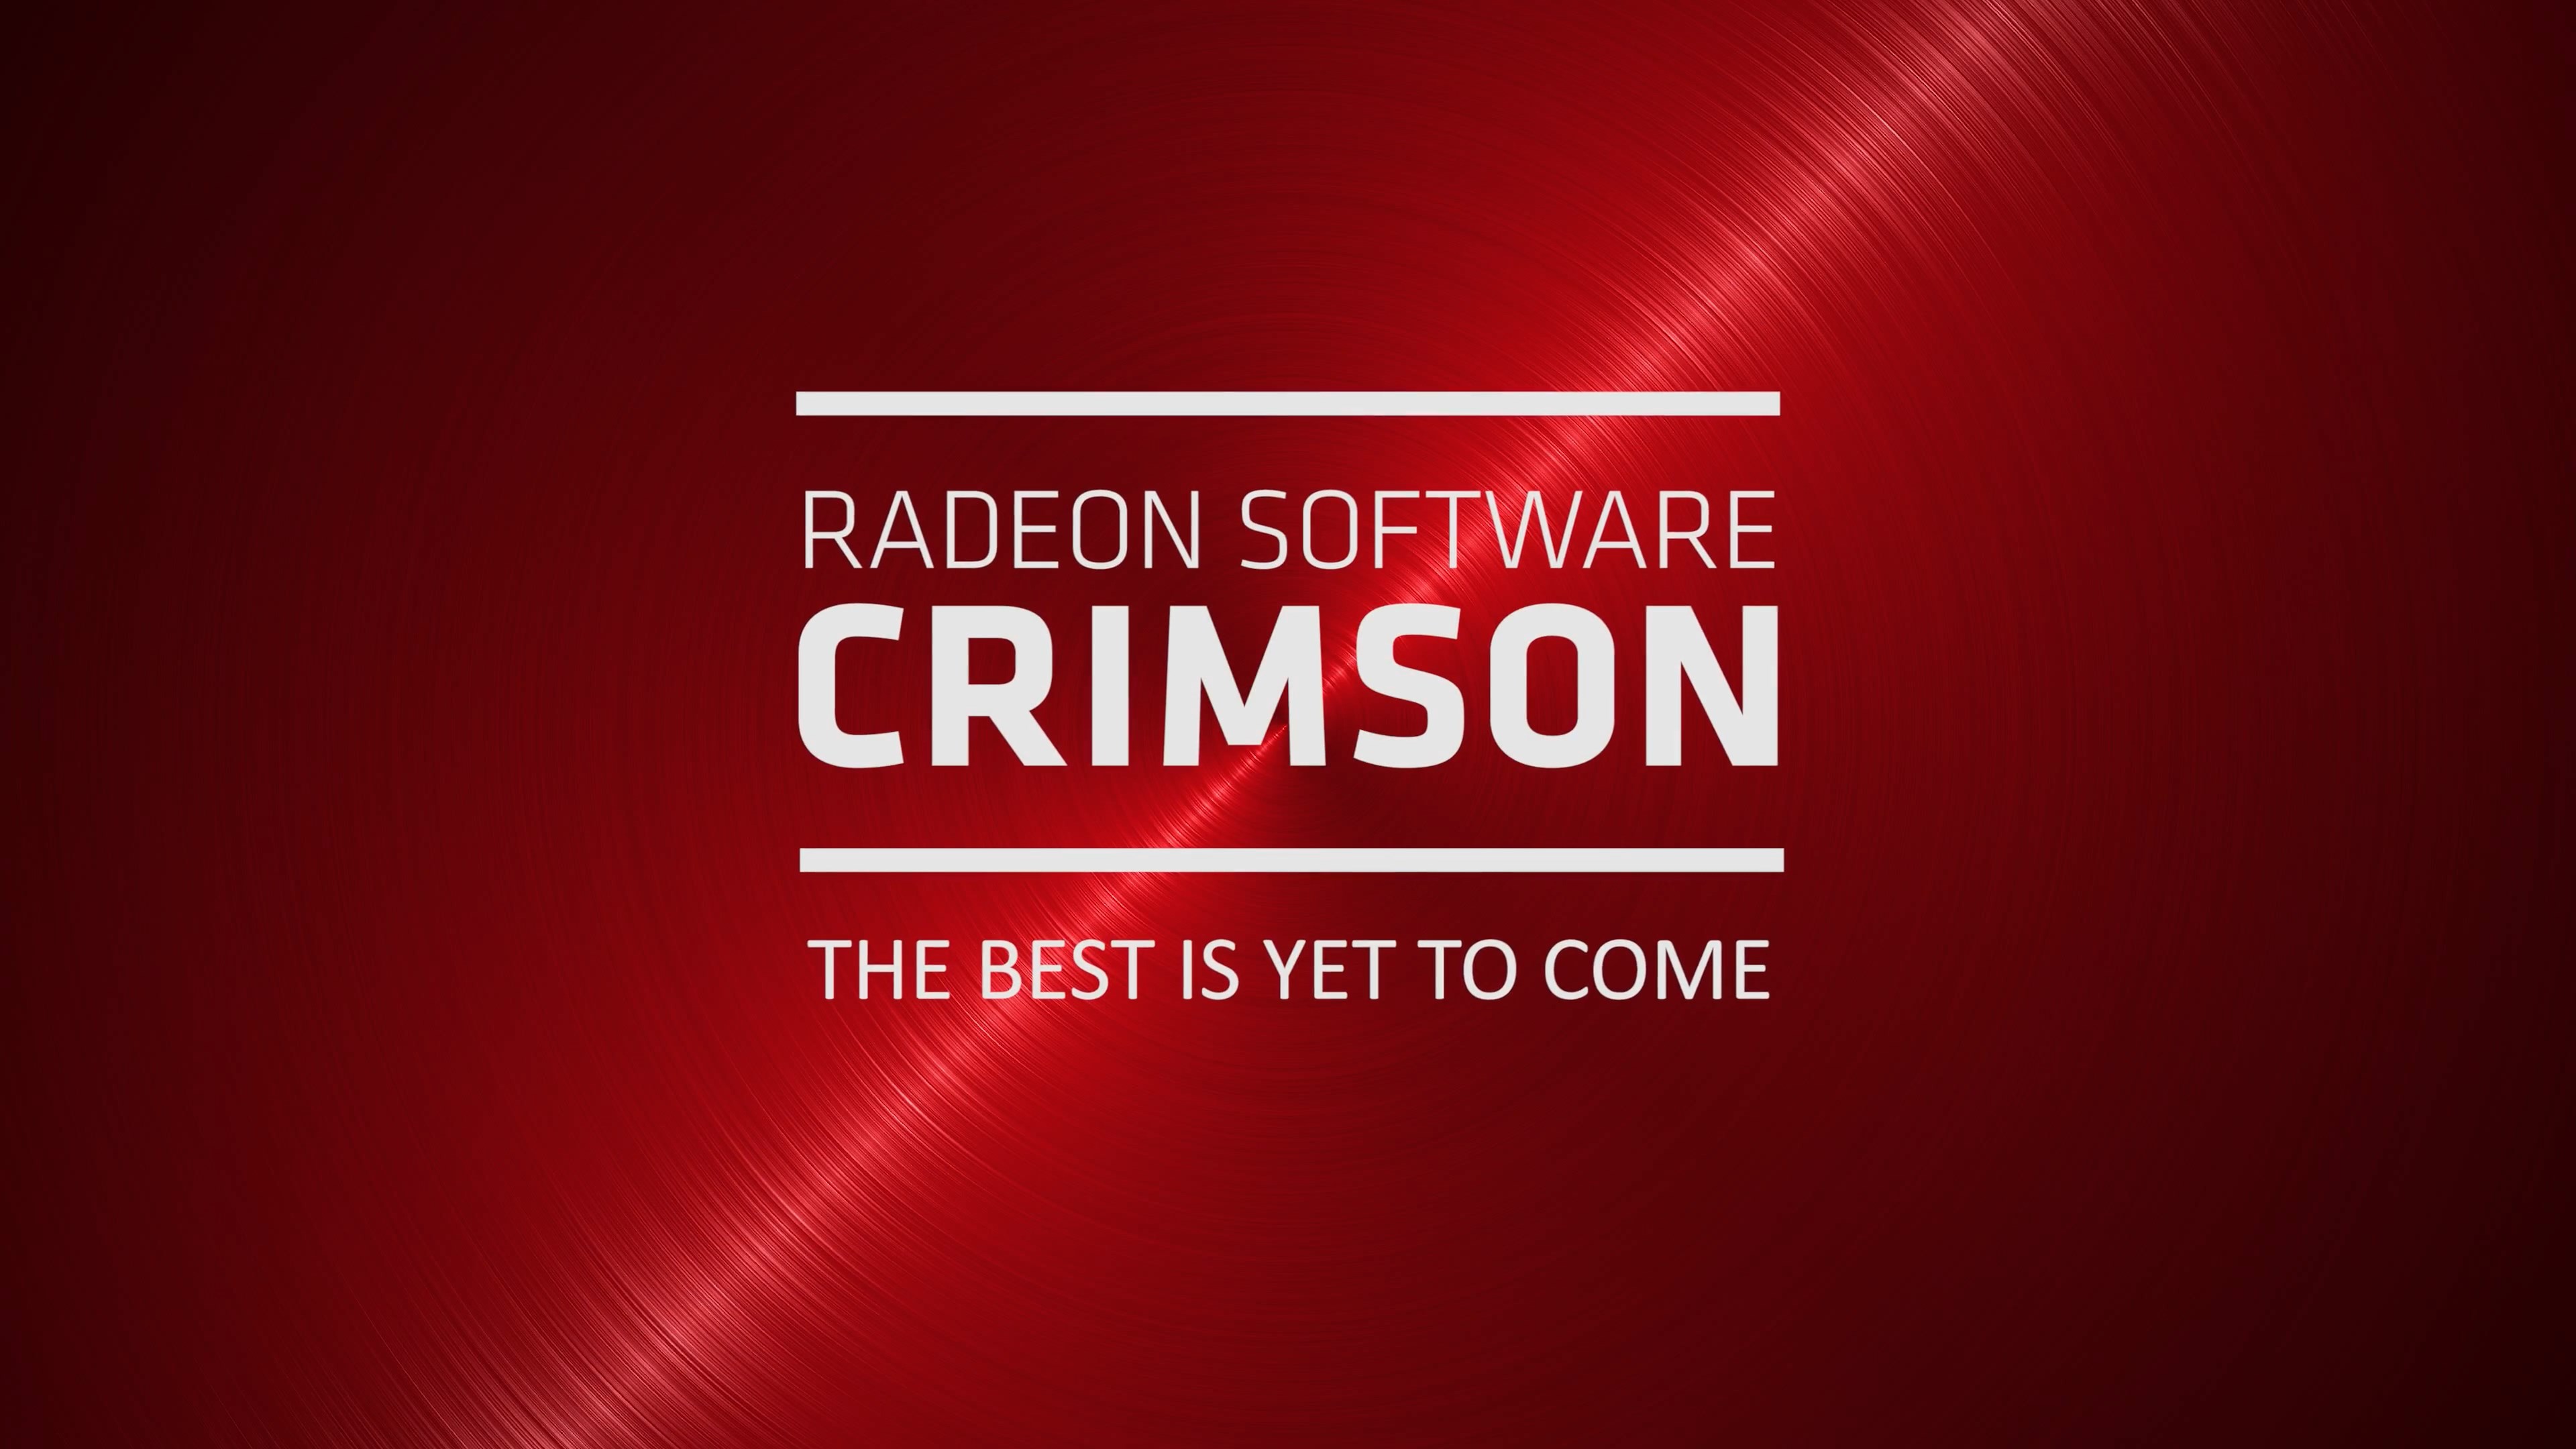 RIP AMD Catalyst, welcome Radeon Software : Crimson Edition 24